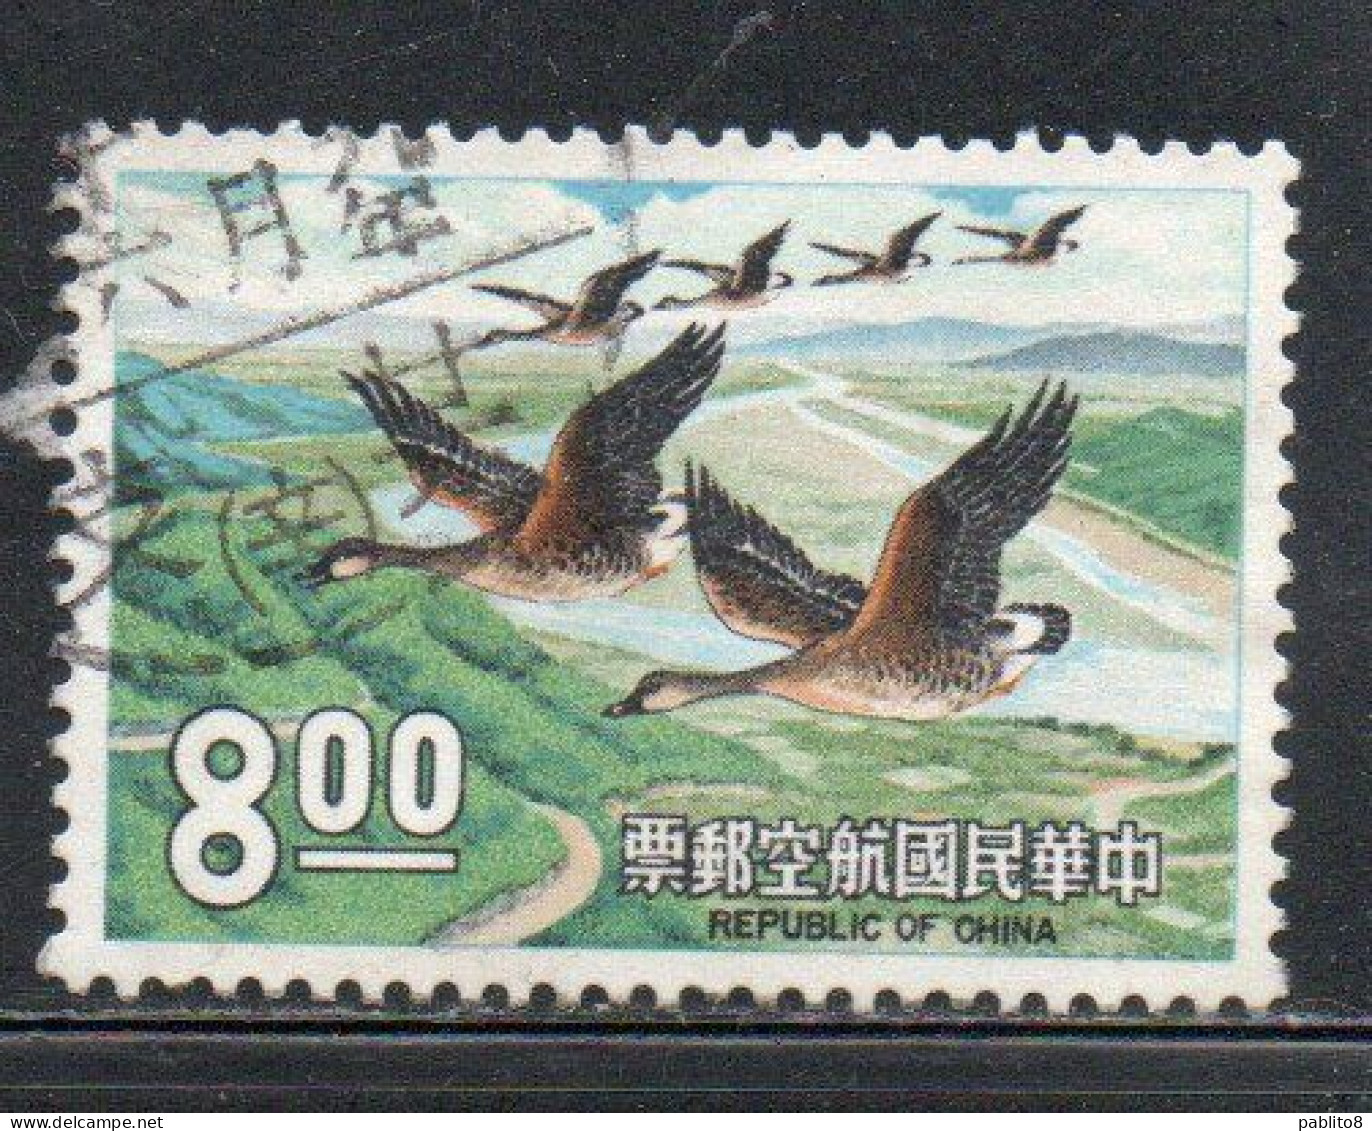 CHINA REPUBLIC CINA TAIWAN FORMOSA 1969 AIR POST MAIL AIRMAIL BIRD FAUNA BIRDS WILD GEESE FLIGT LAND 8$ USED USATO - Poste Aérienne